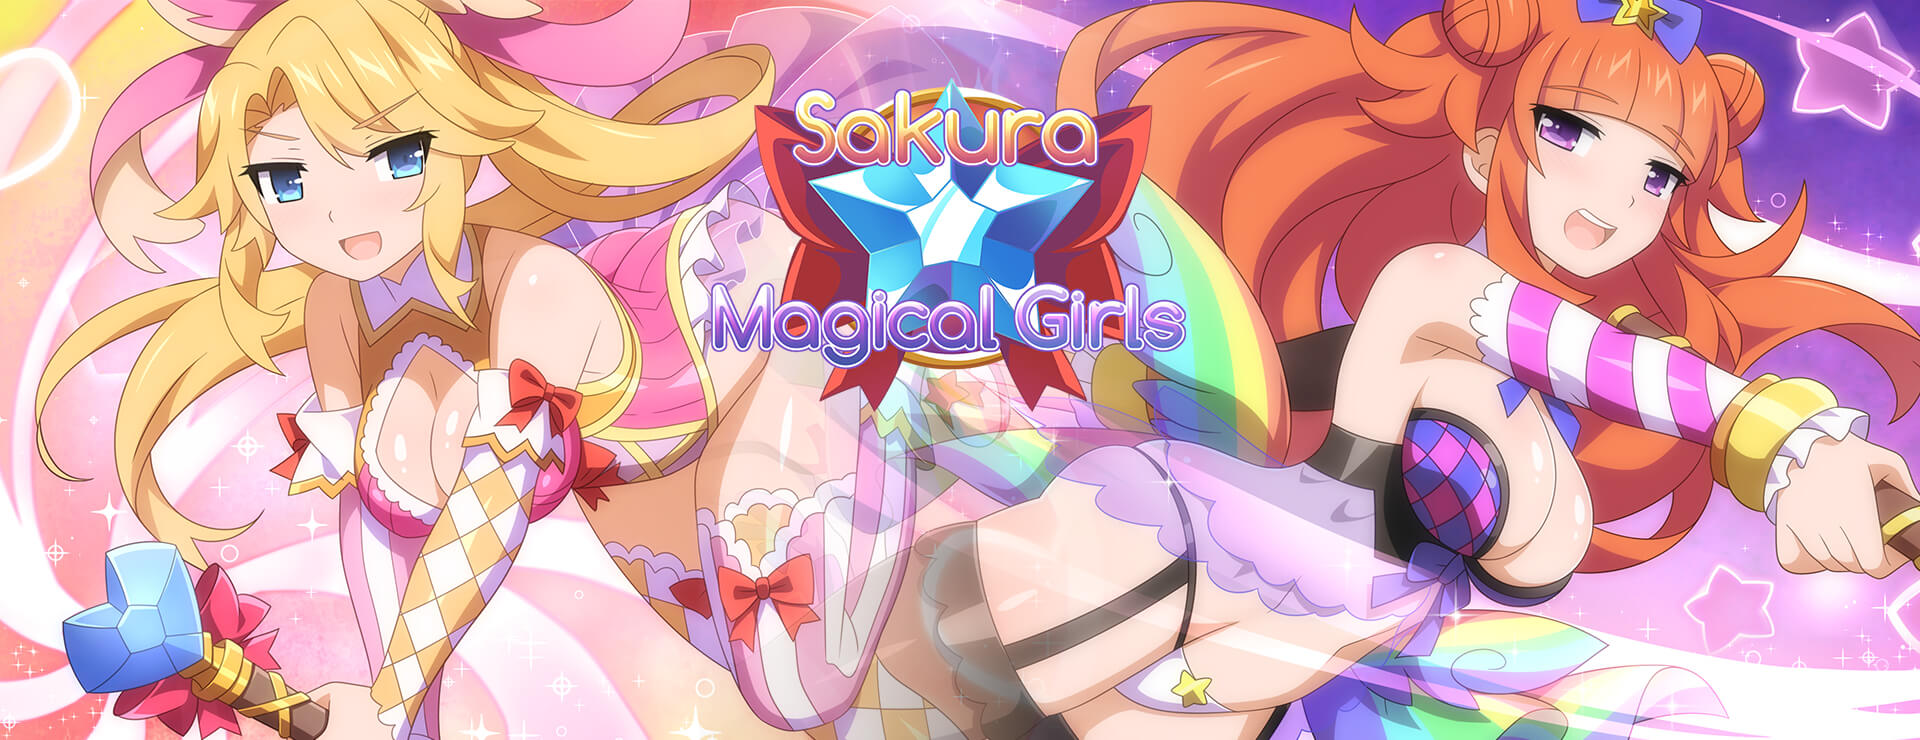 Sakura Magical Girls - Powieść wizualna Gra